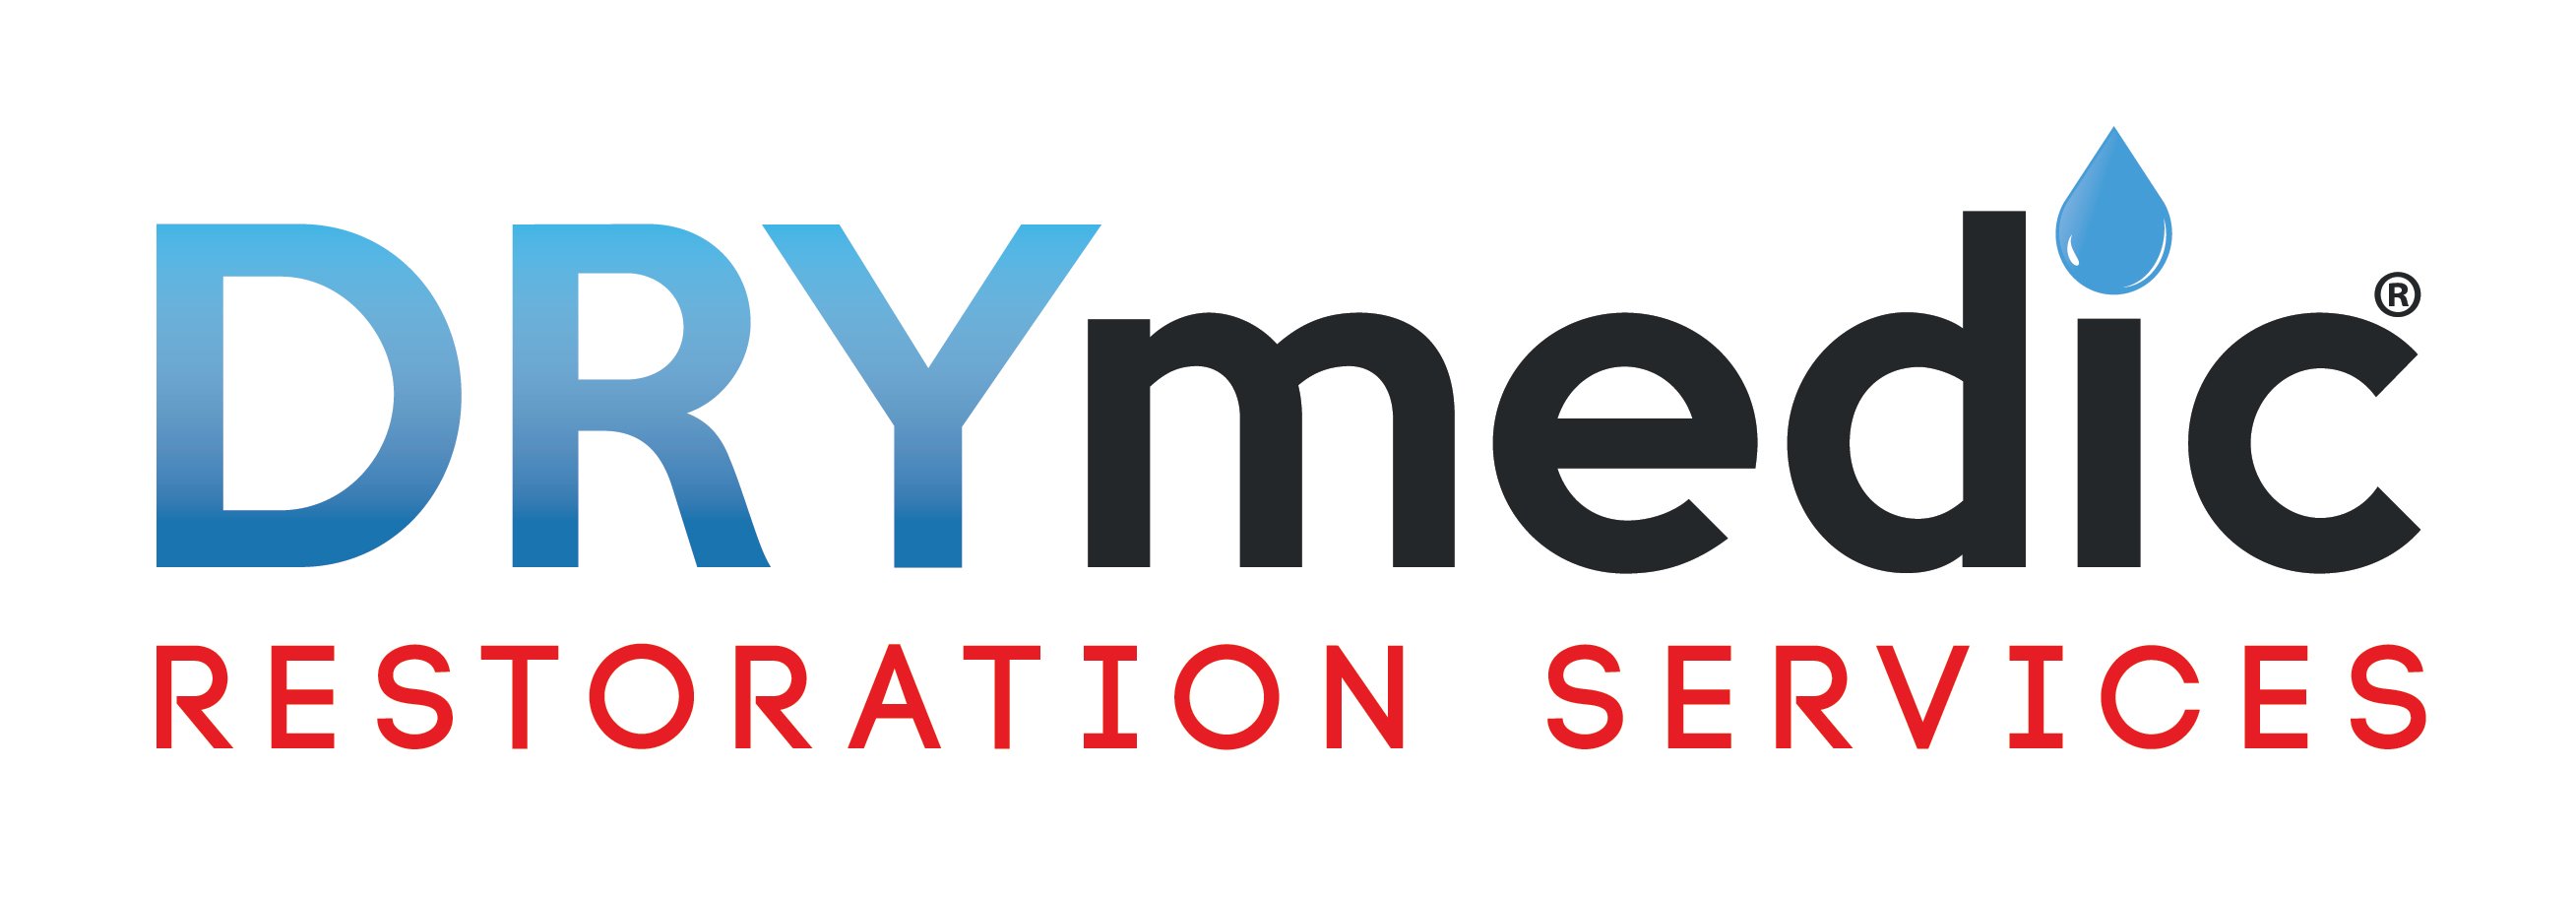 DRYmedic Restoration Services of Indianapolis Logo